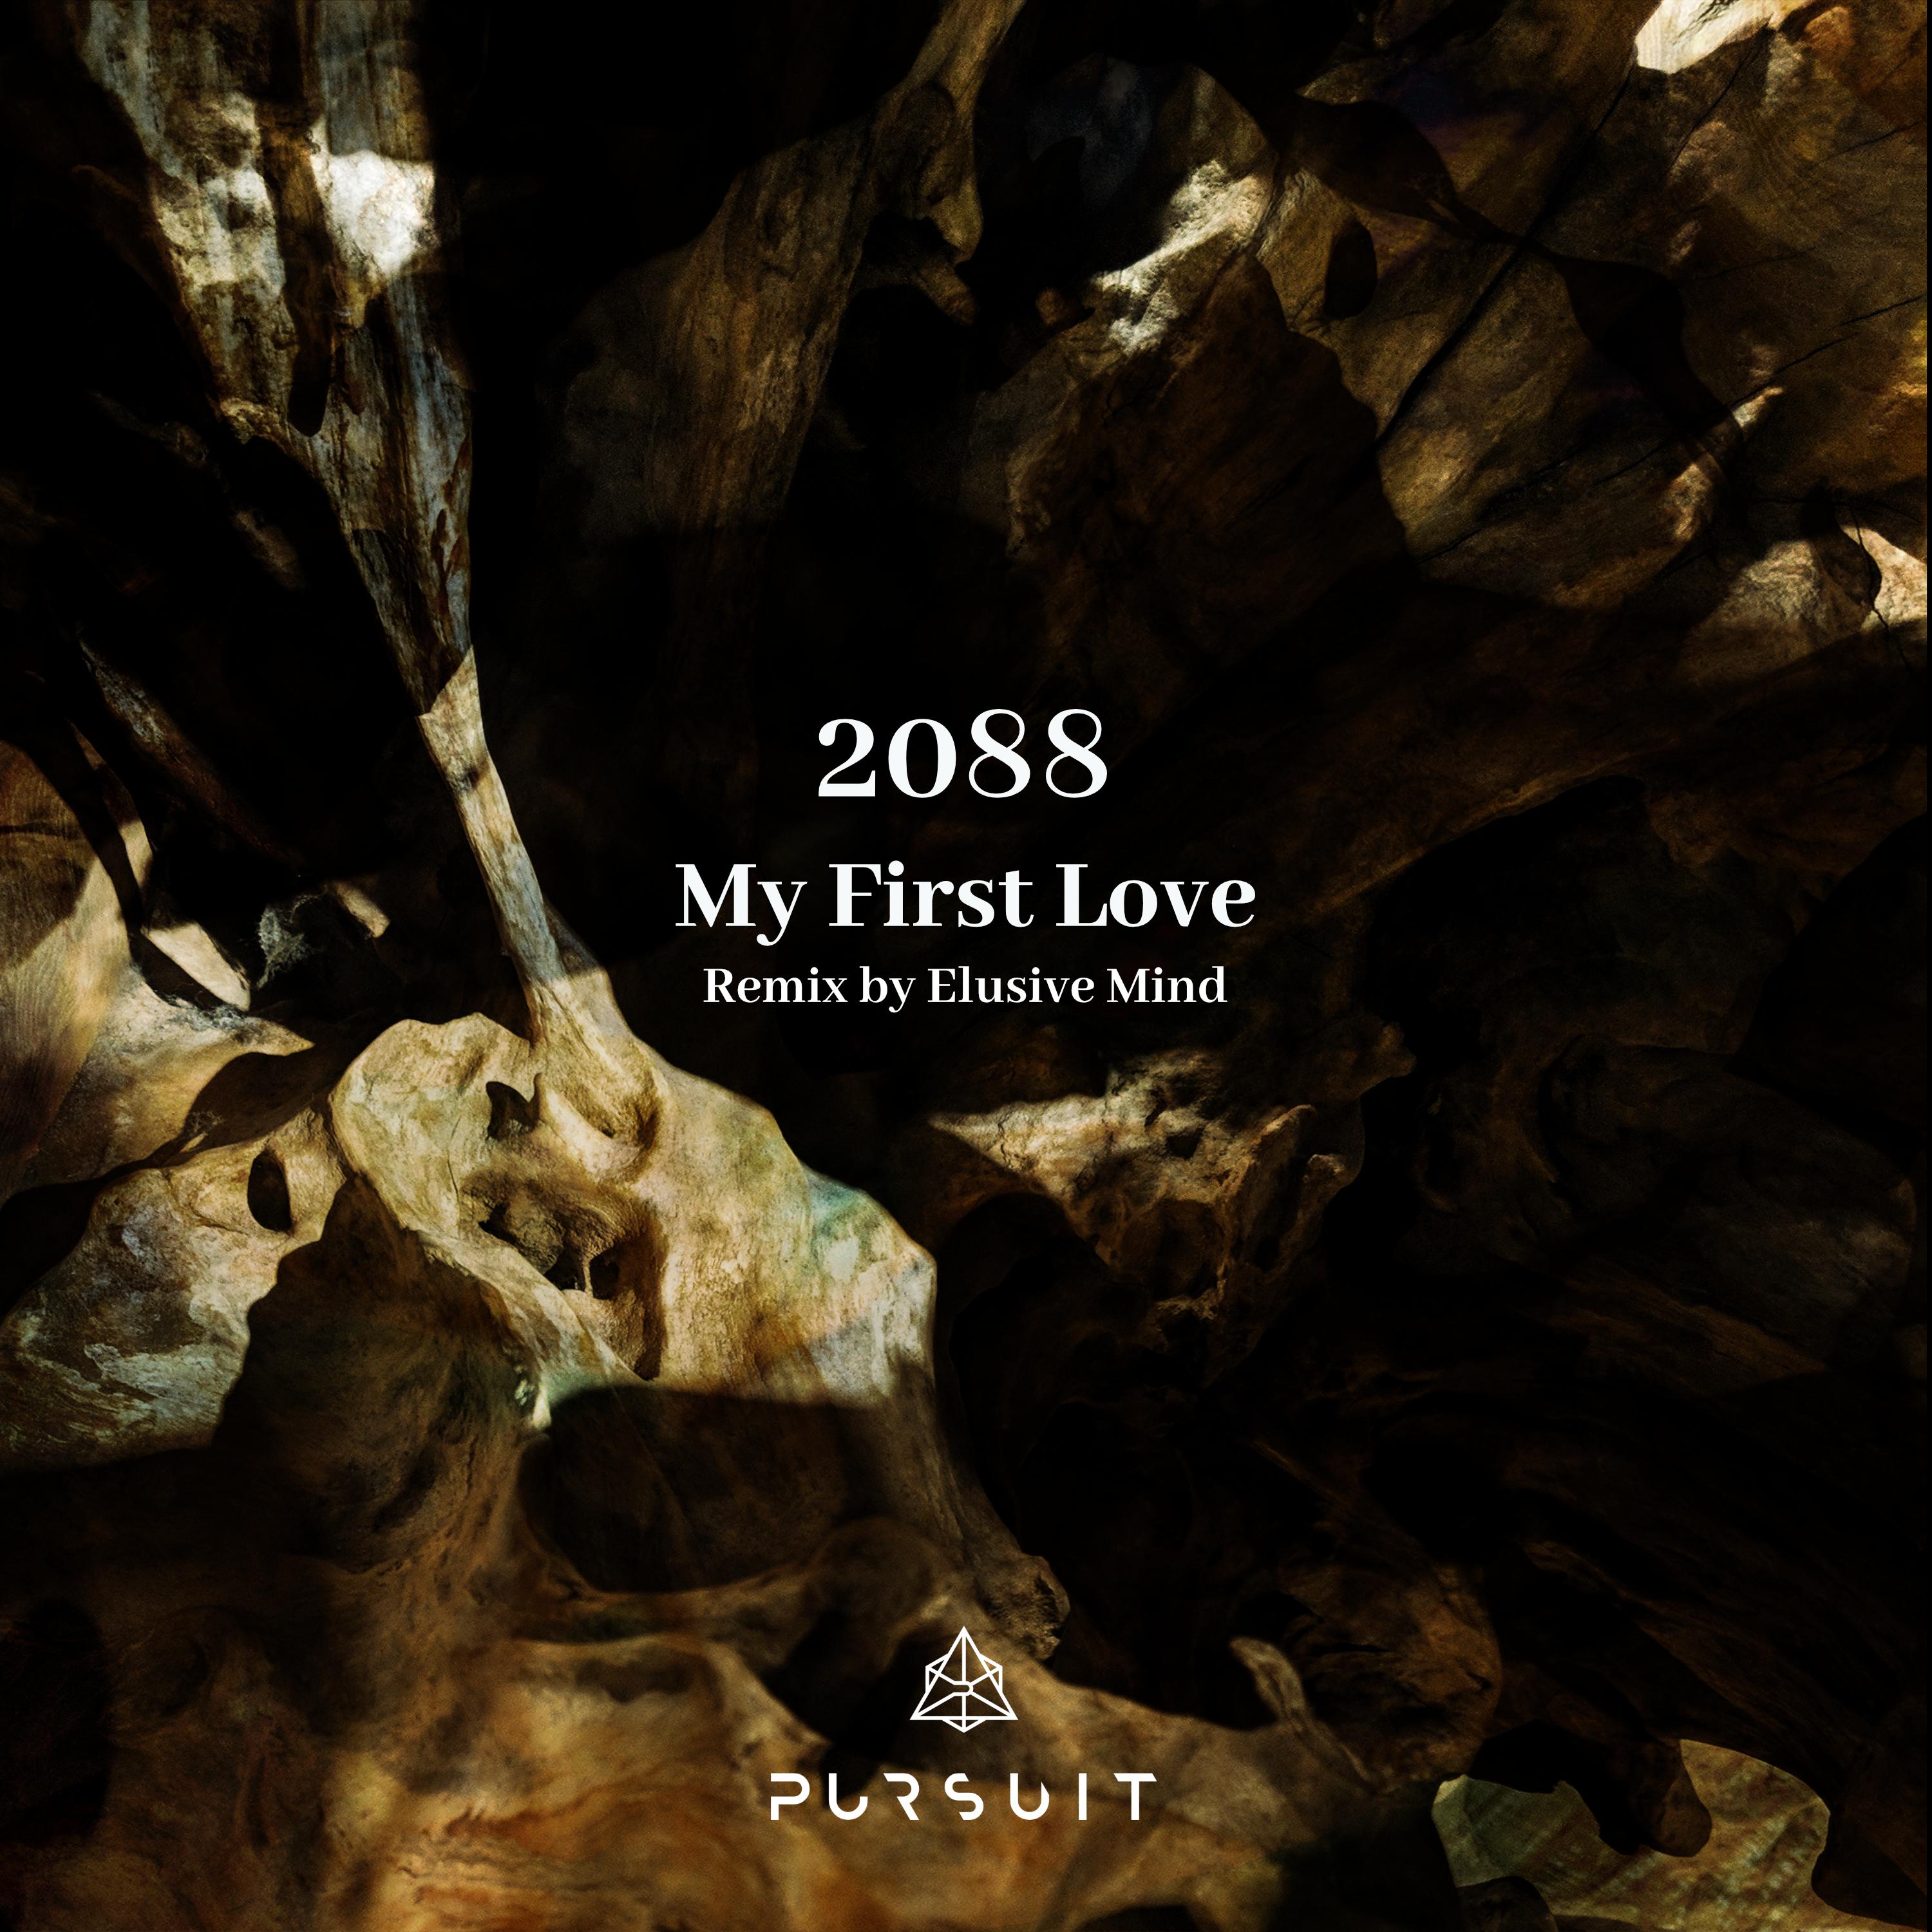 2088 - My First Love